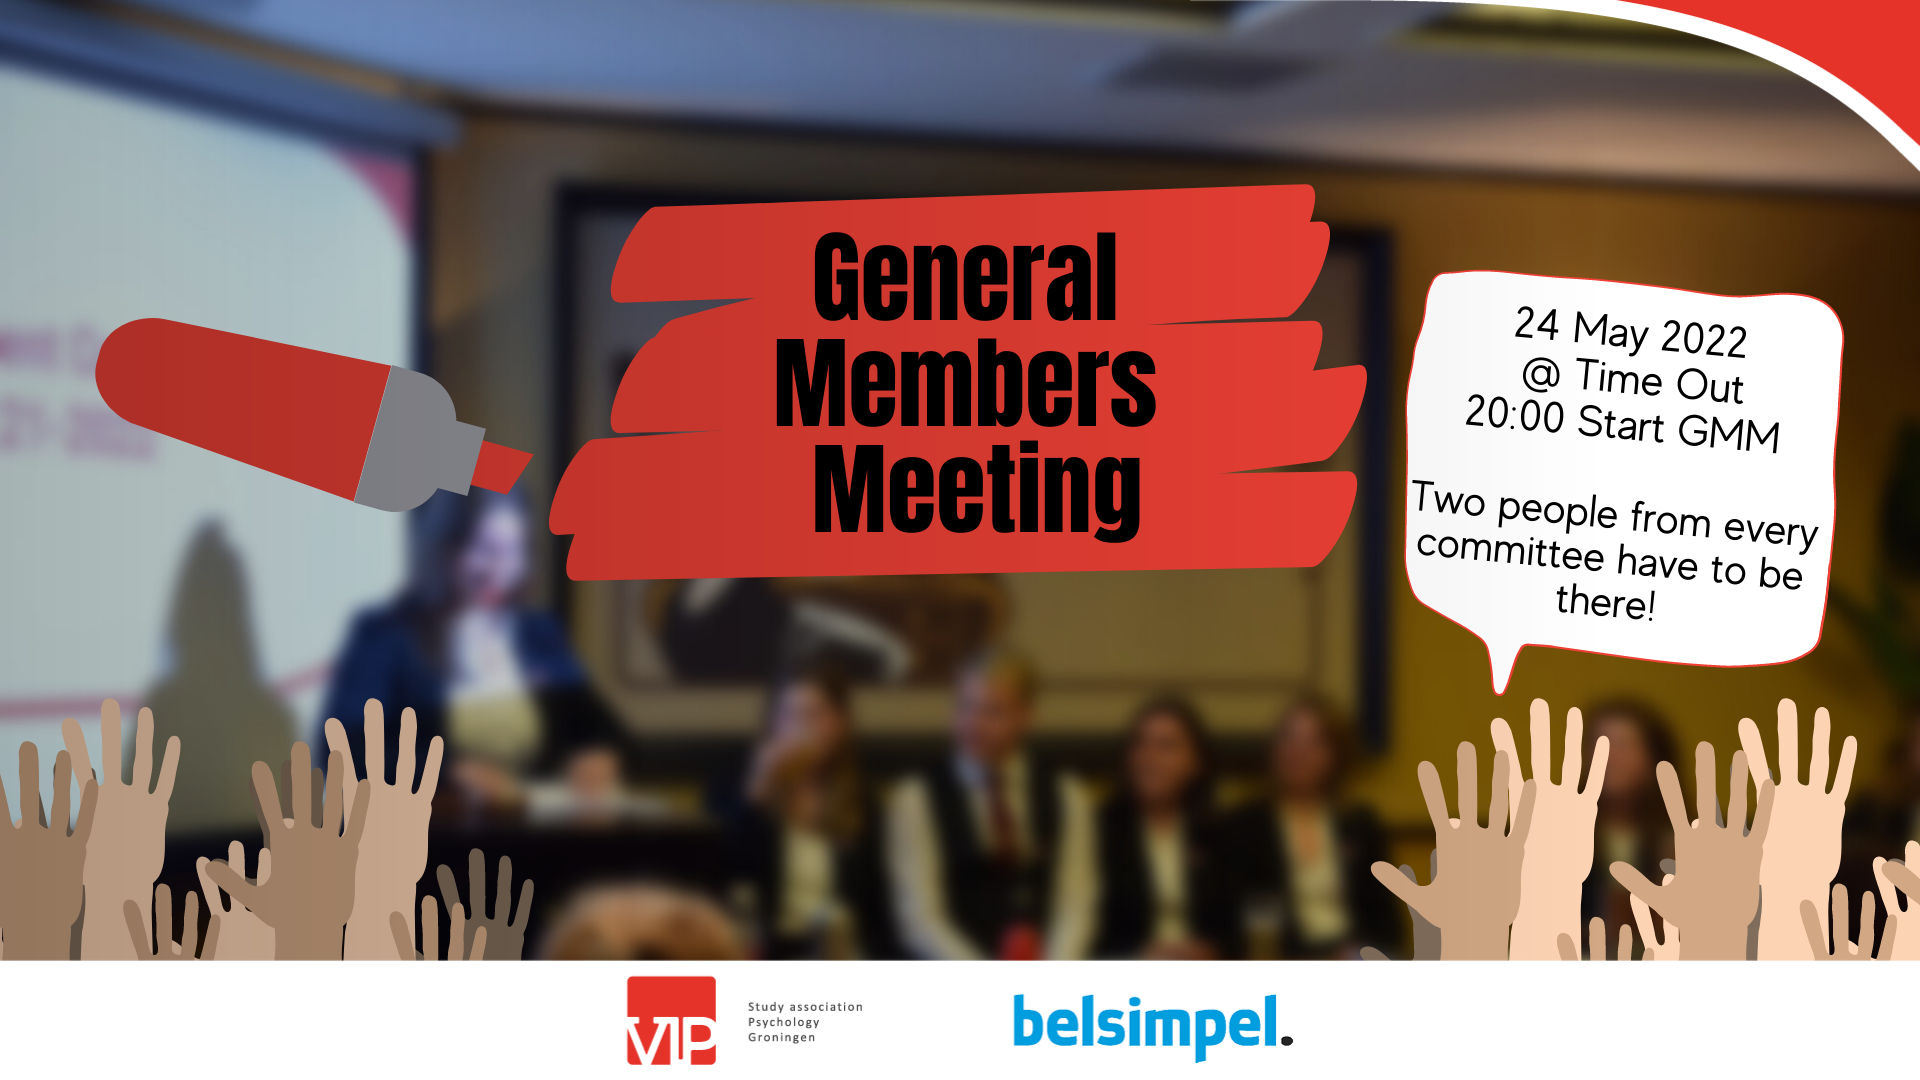 VIP: General Members Meeting 4